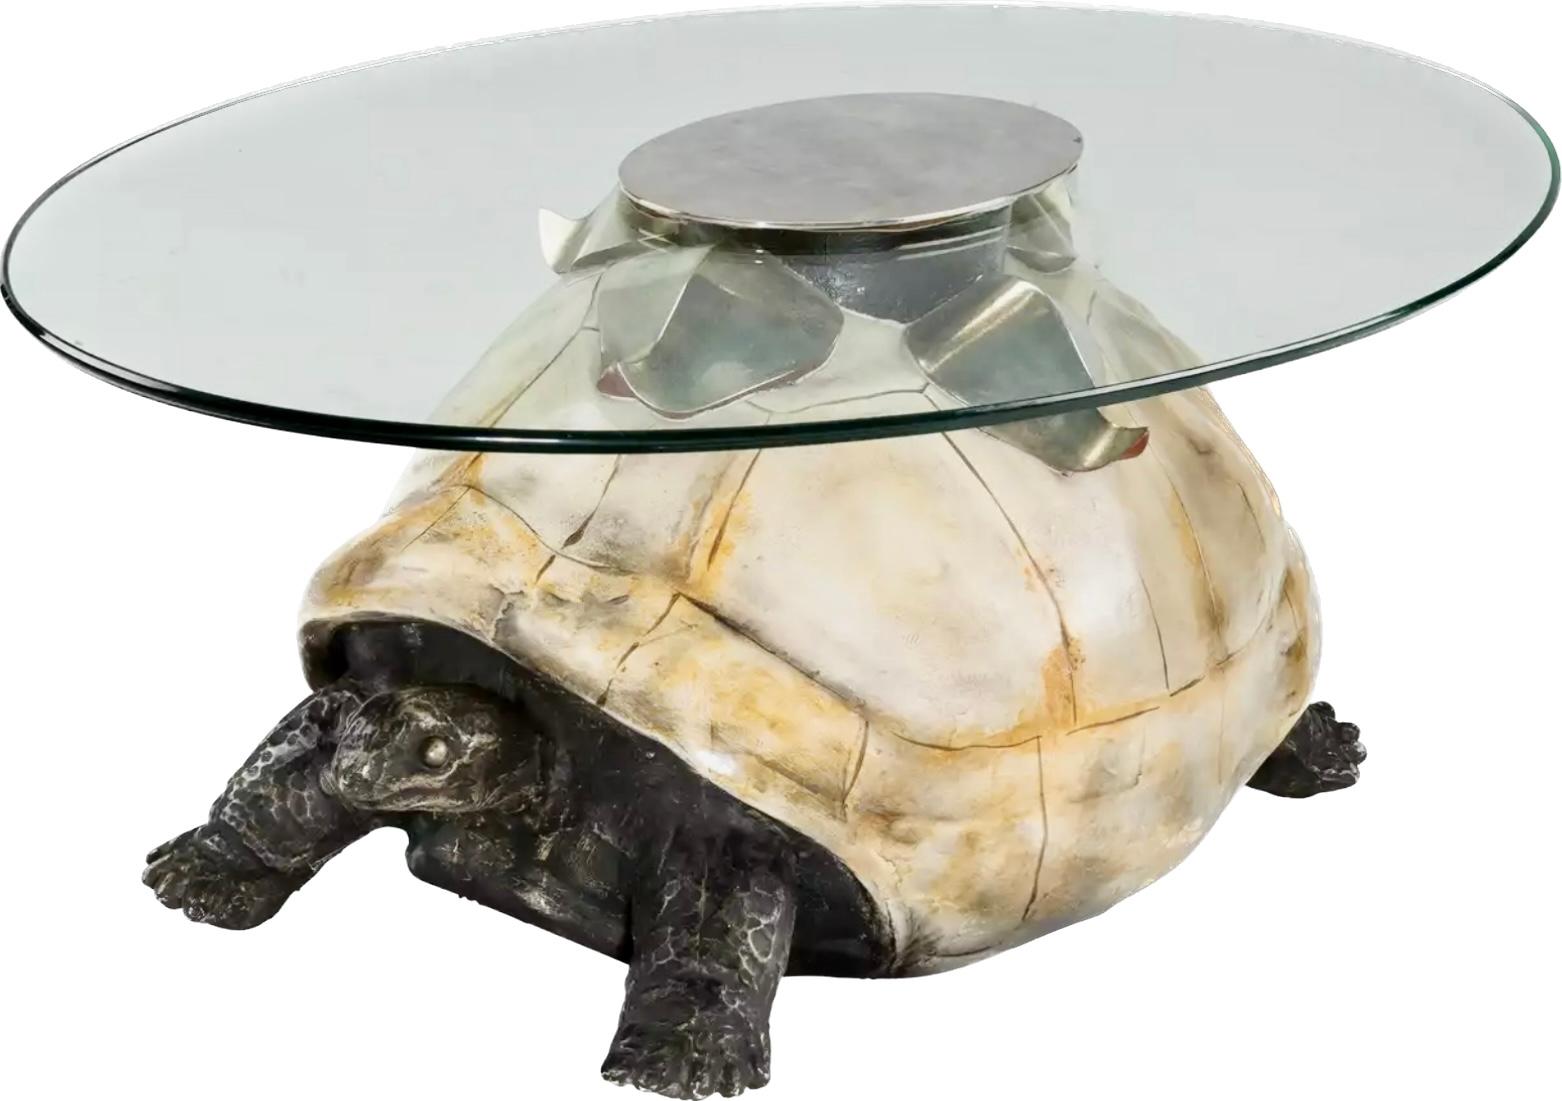 composition about a tortoise